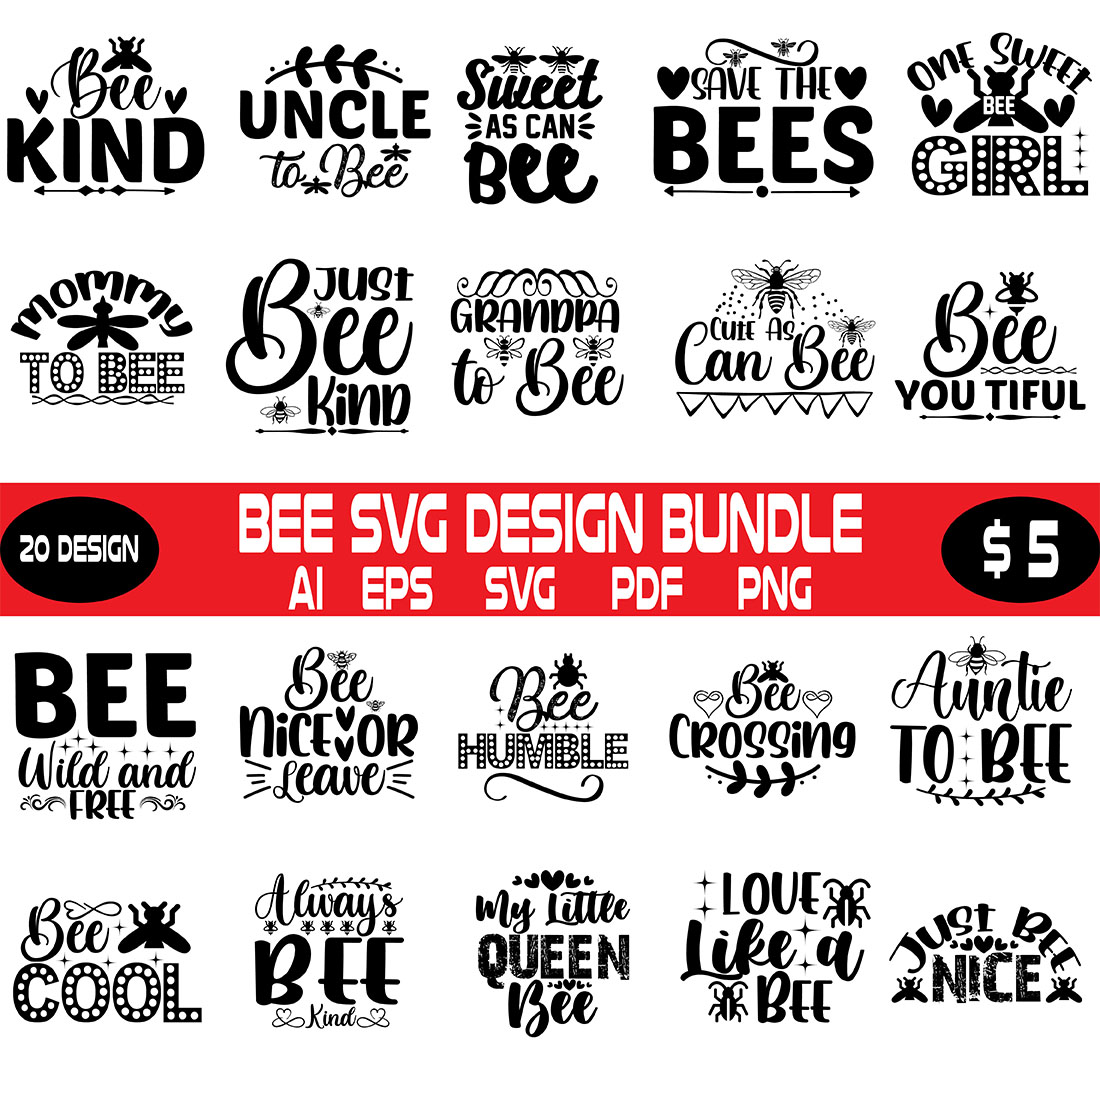 Bee svg design bundle.